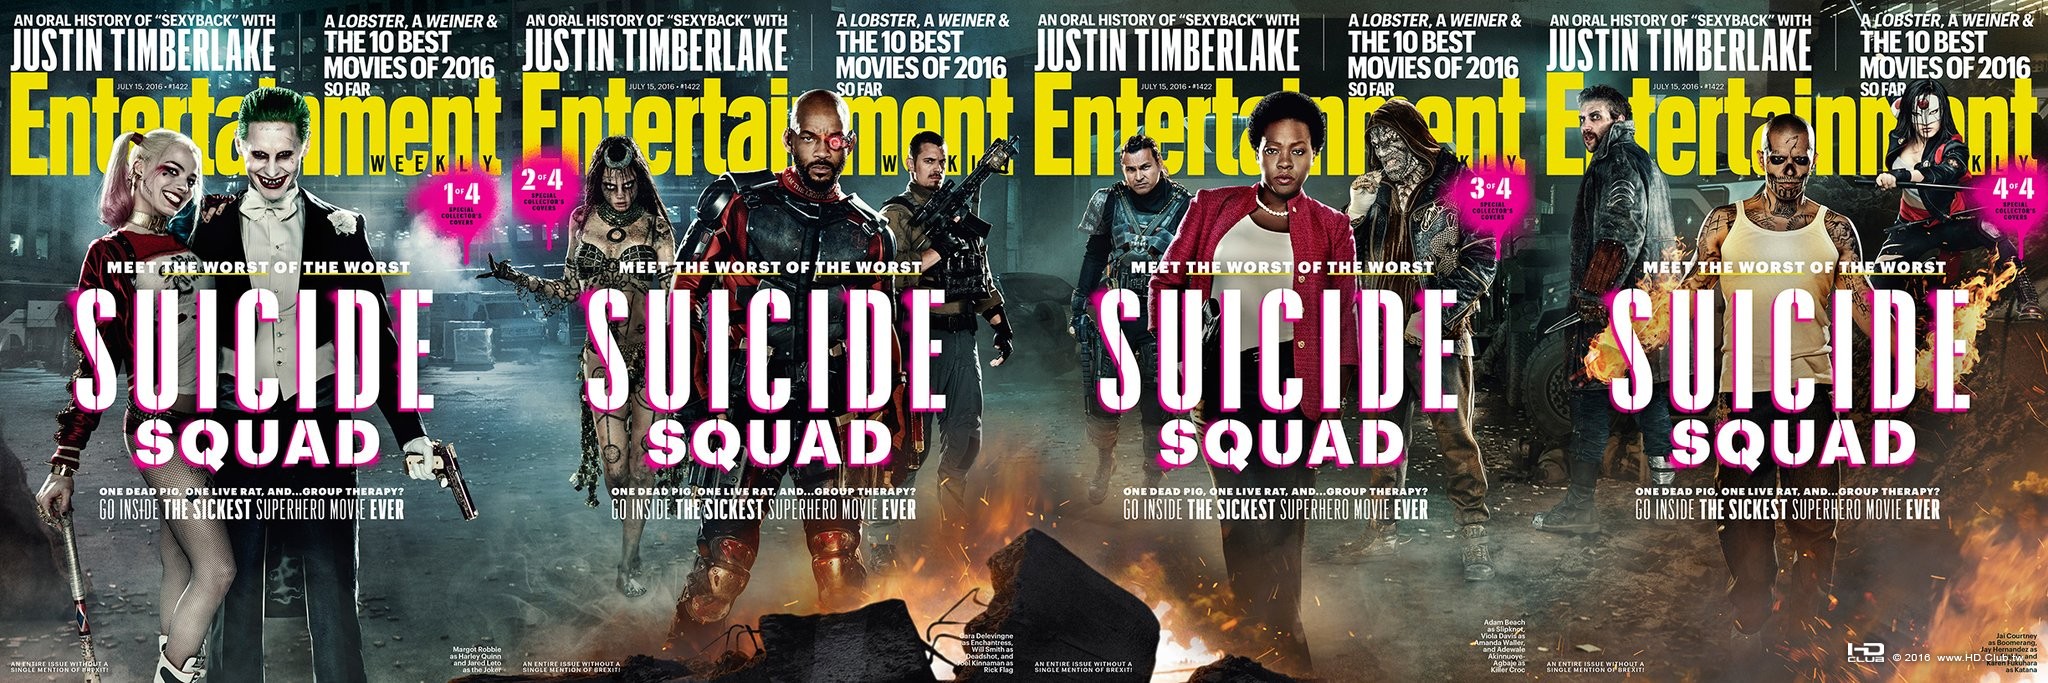 suicide-squad-ew-magazine-covers.jpg